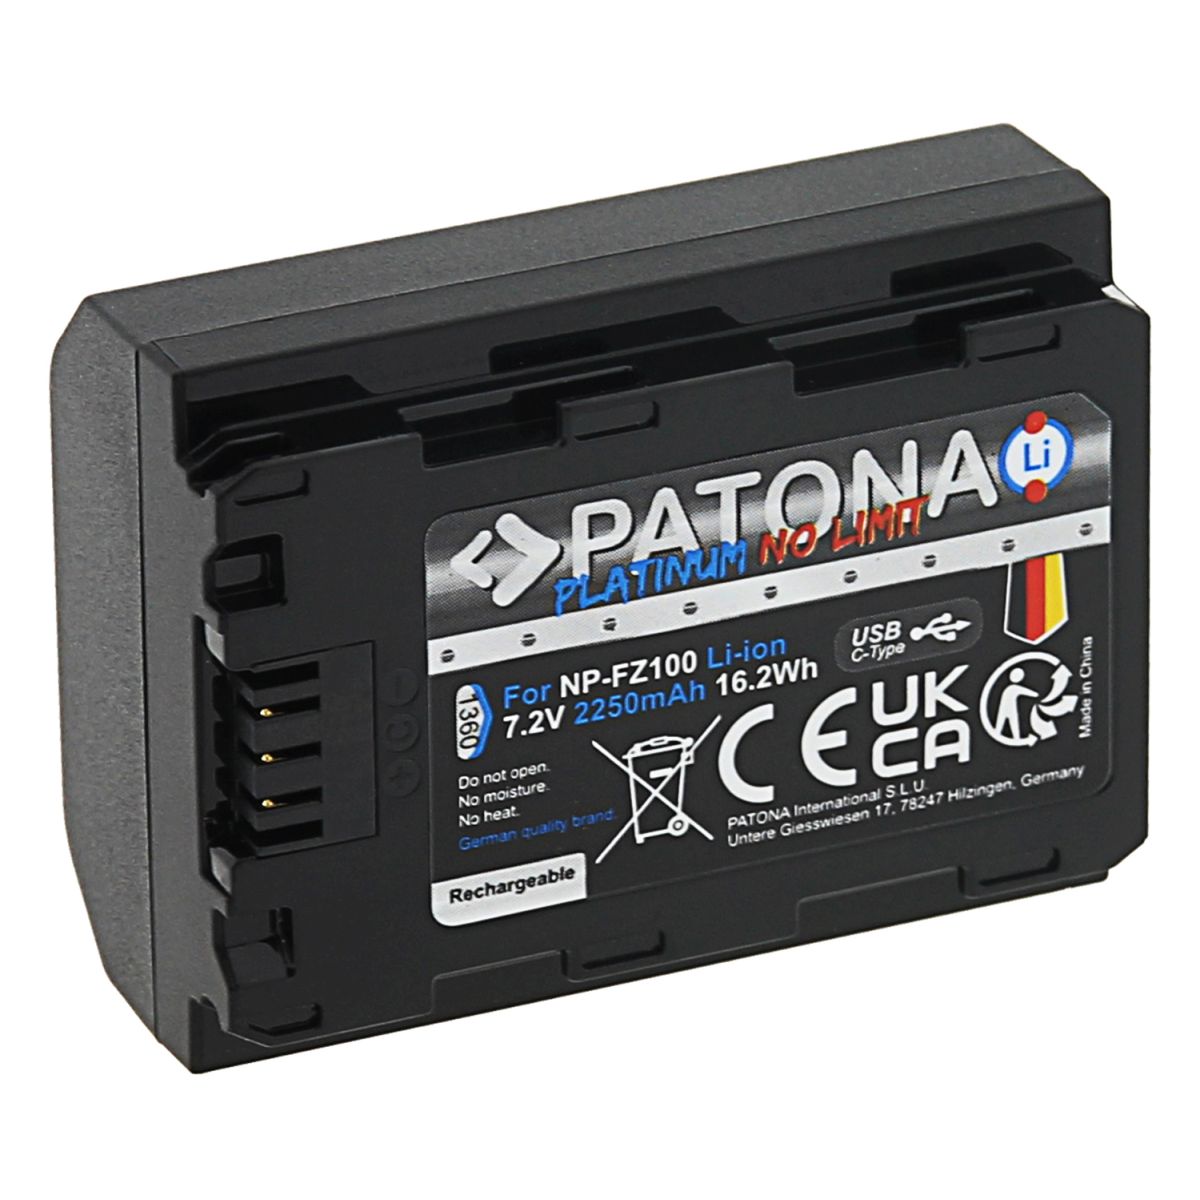 Patona Platinum Akku mit USB-C Input für Sony NP-FZ100